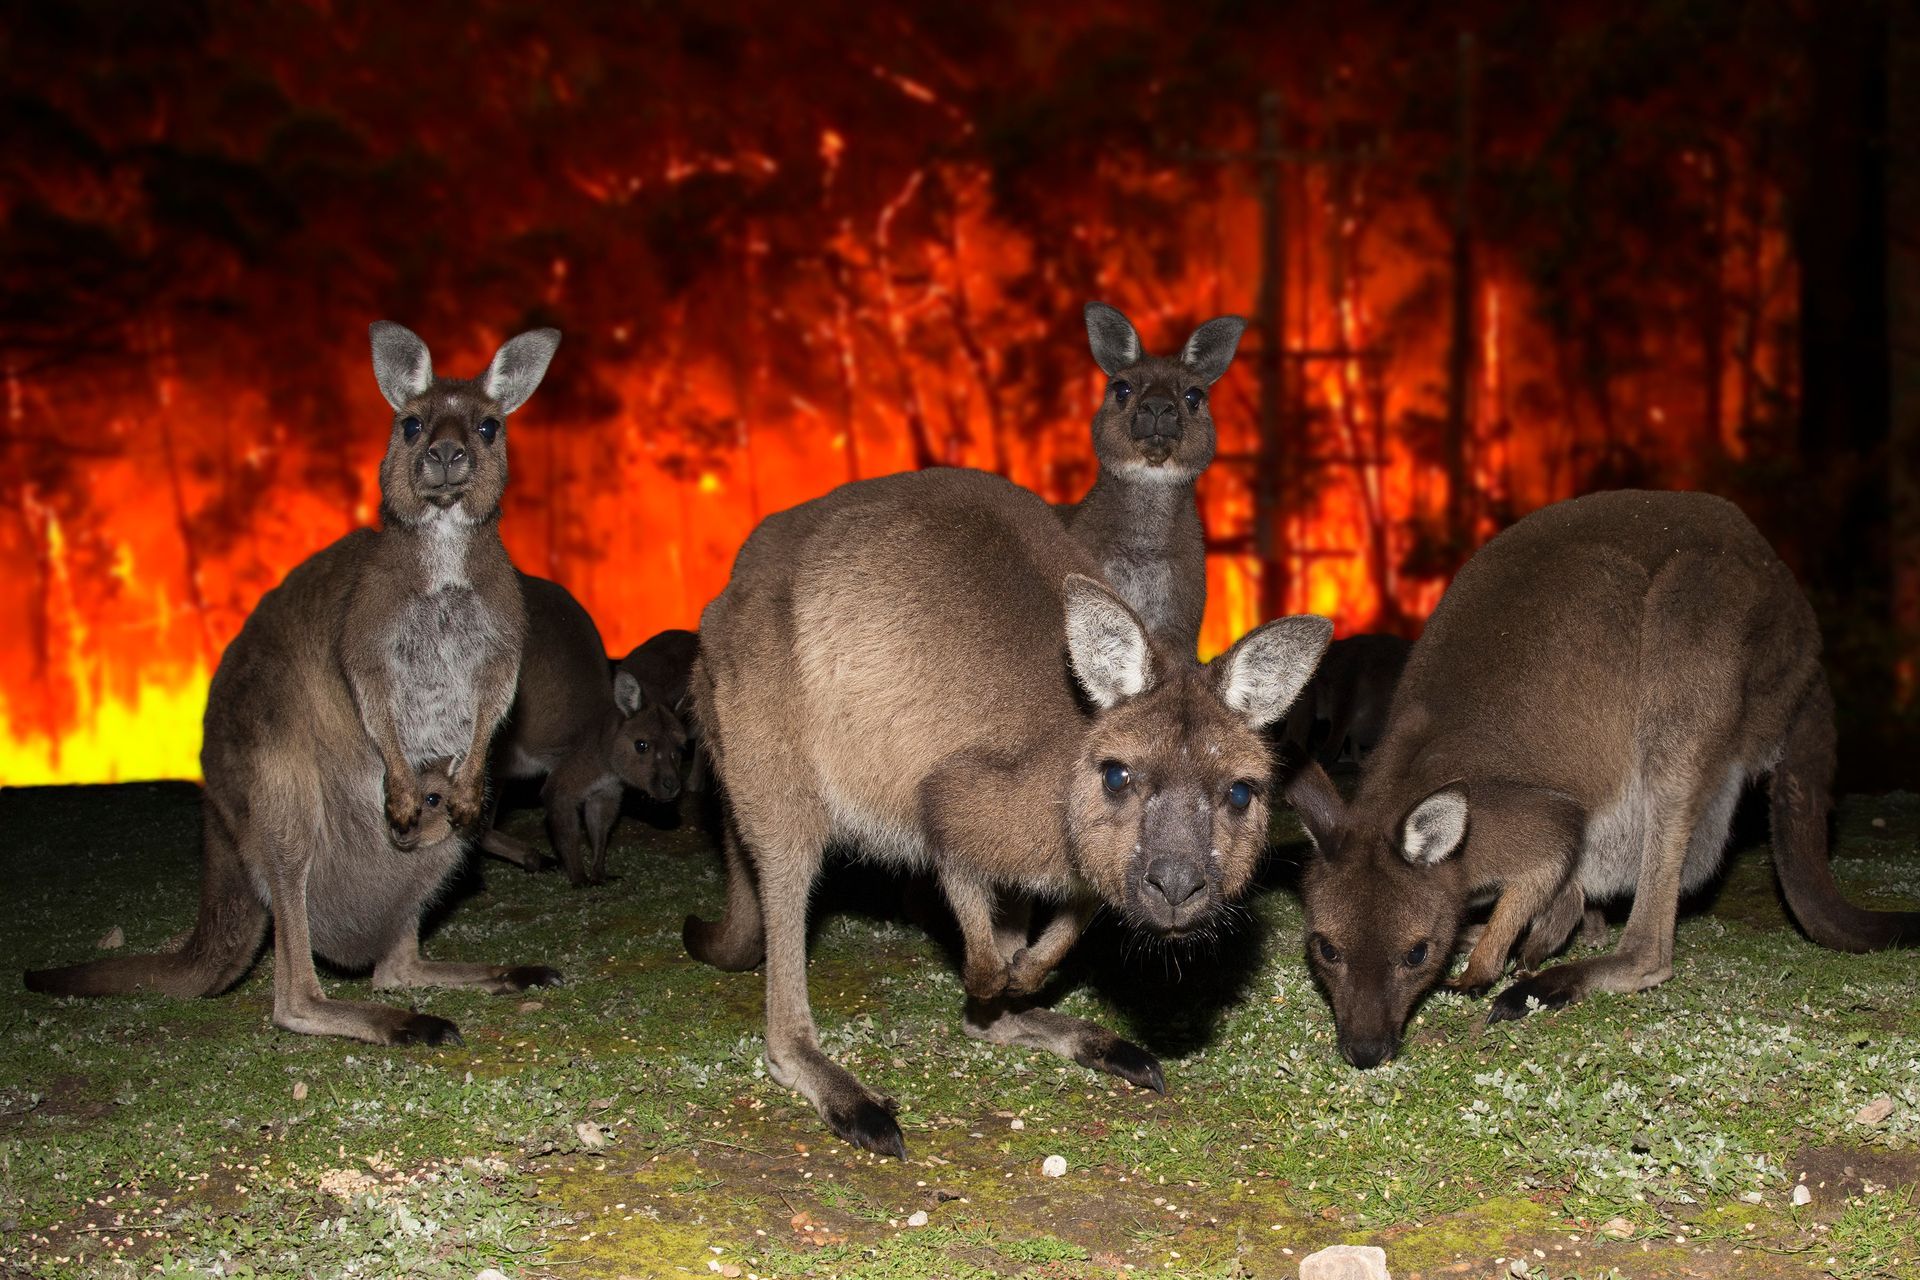 A small family of kangaroos flee a raging Australian bushfire.